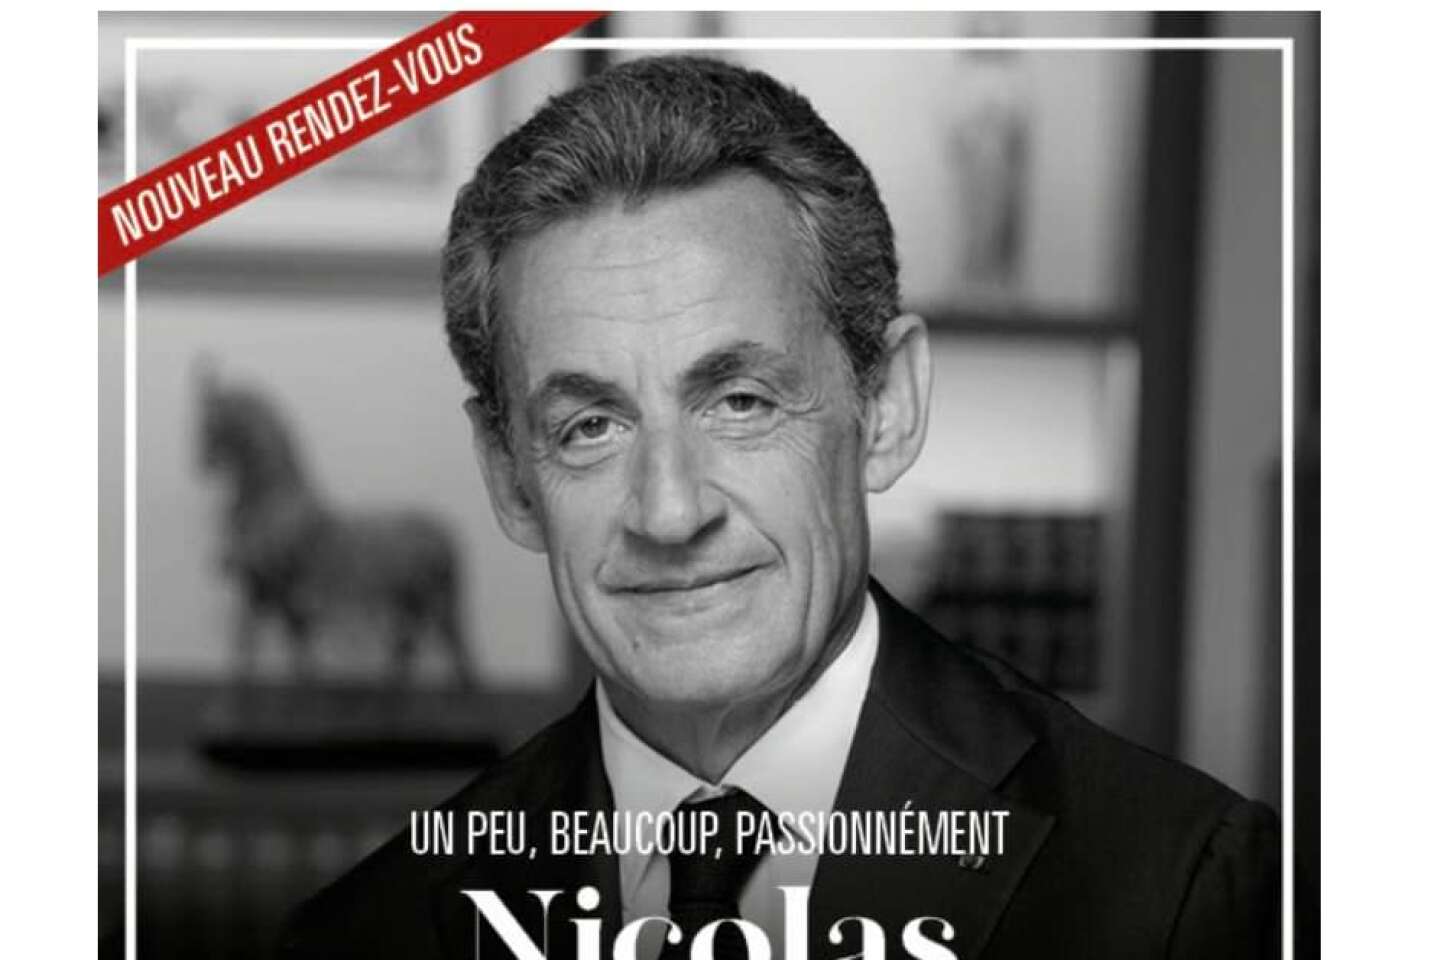 Verrassende aankomst van Nicolas Sarkozy in het Nationale Theater van Nice